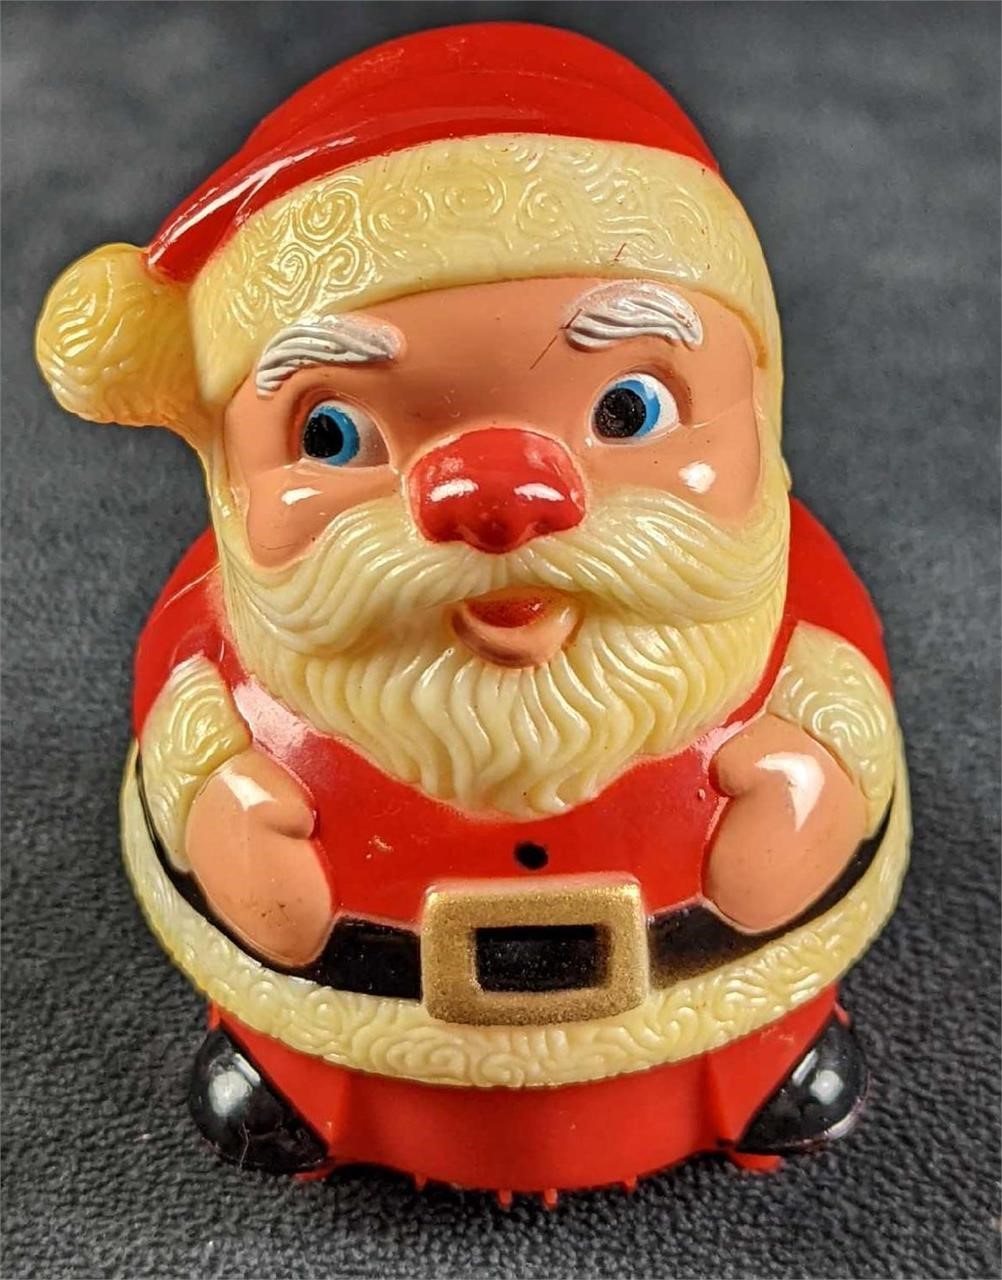 Vintage Fun World Plastic "Laughing" Santa